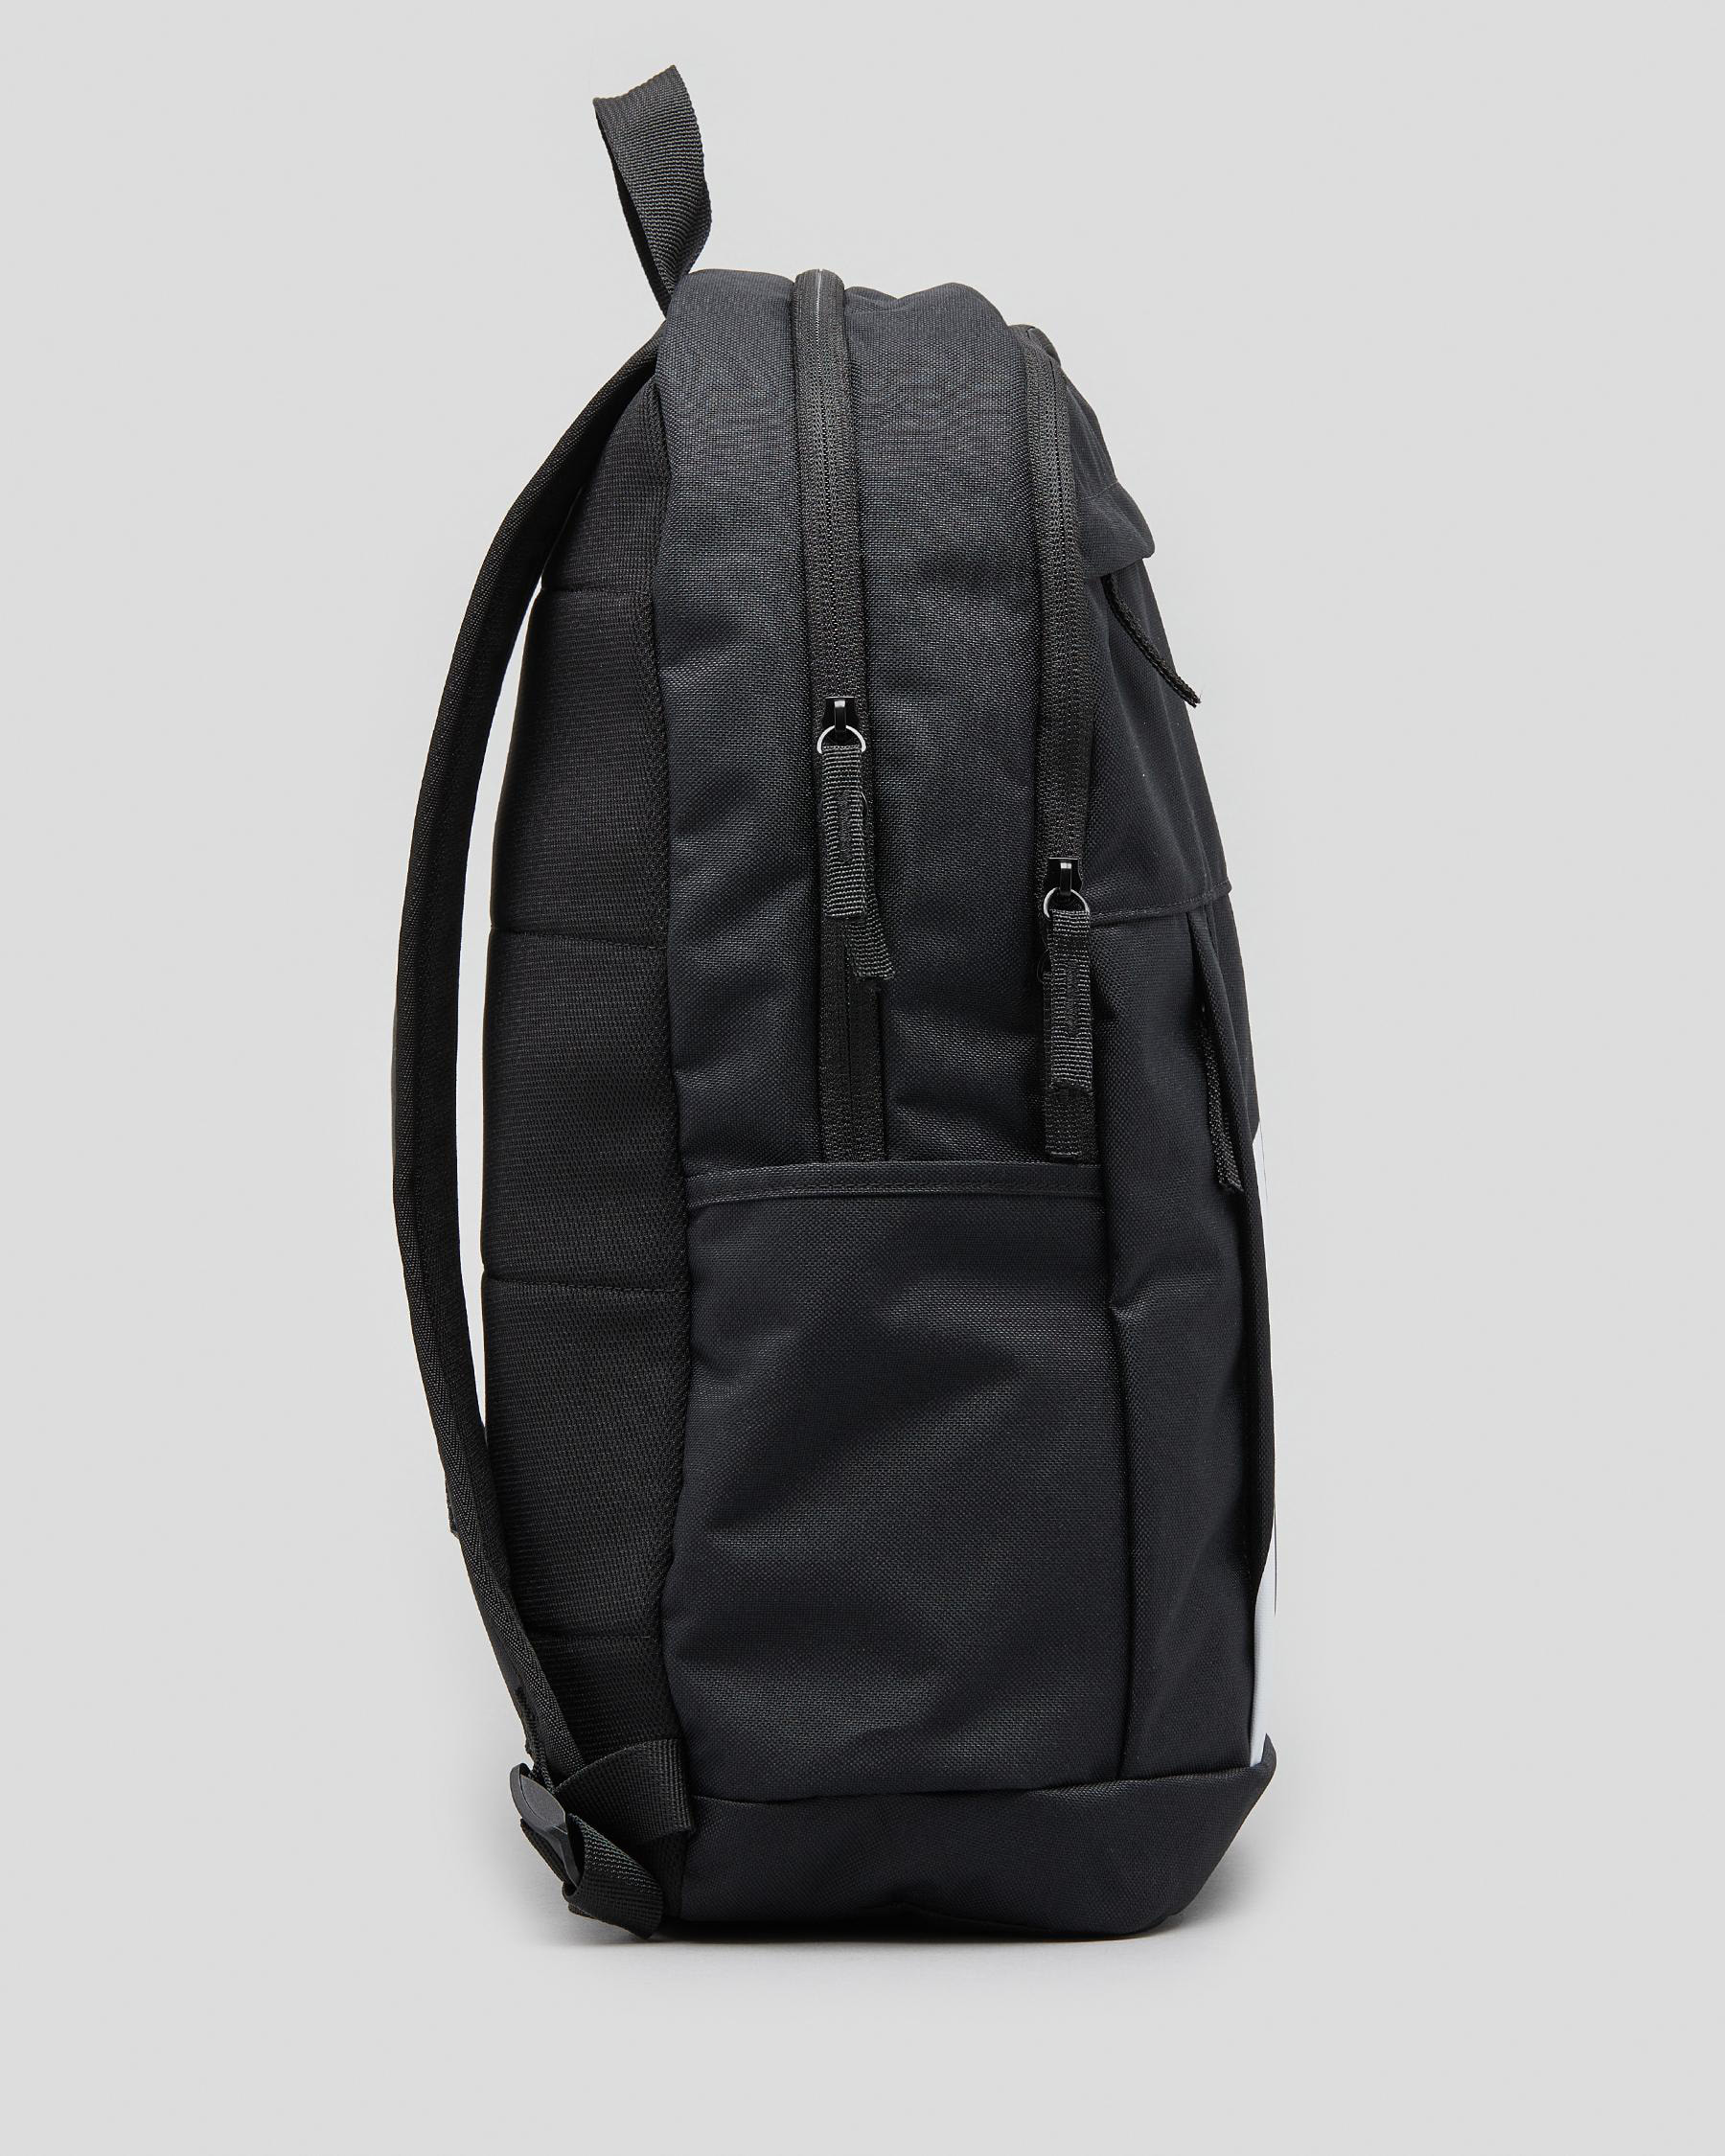 Nike Elemental Backpack In Black/black/white - Fast Shipping & Easy ...